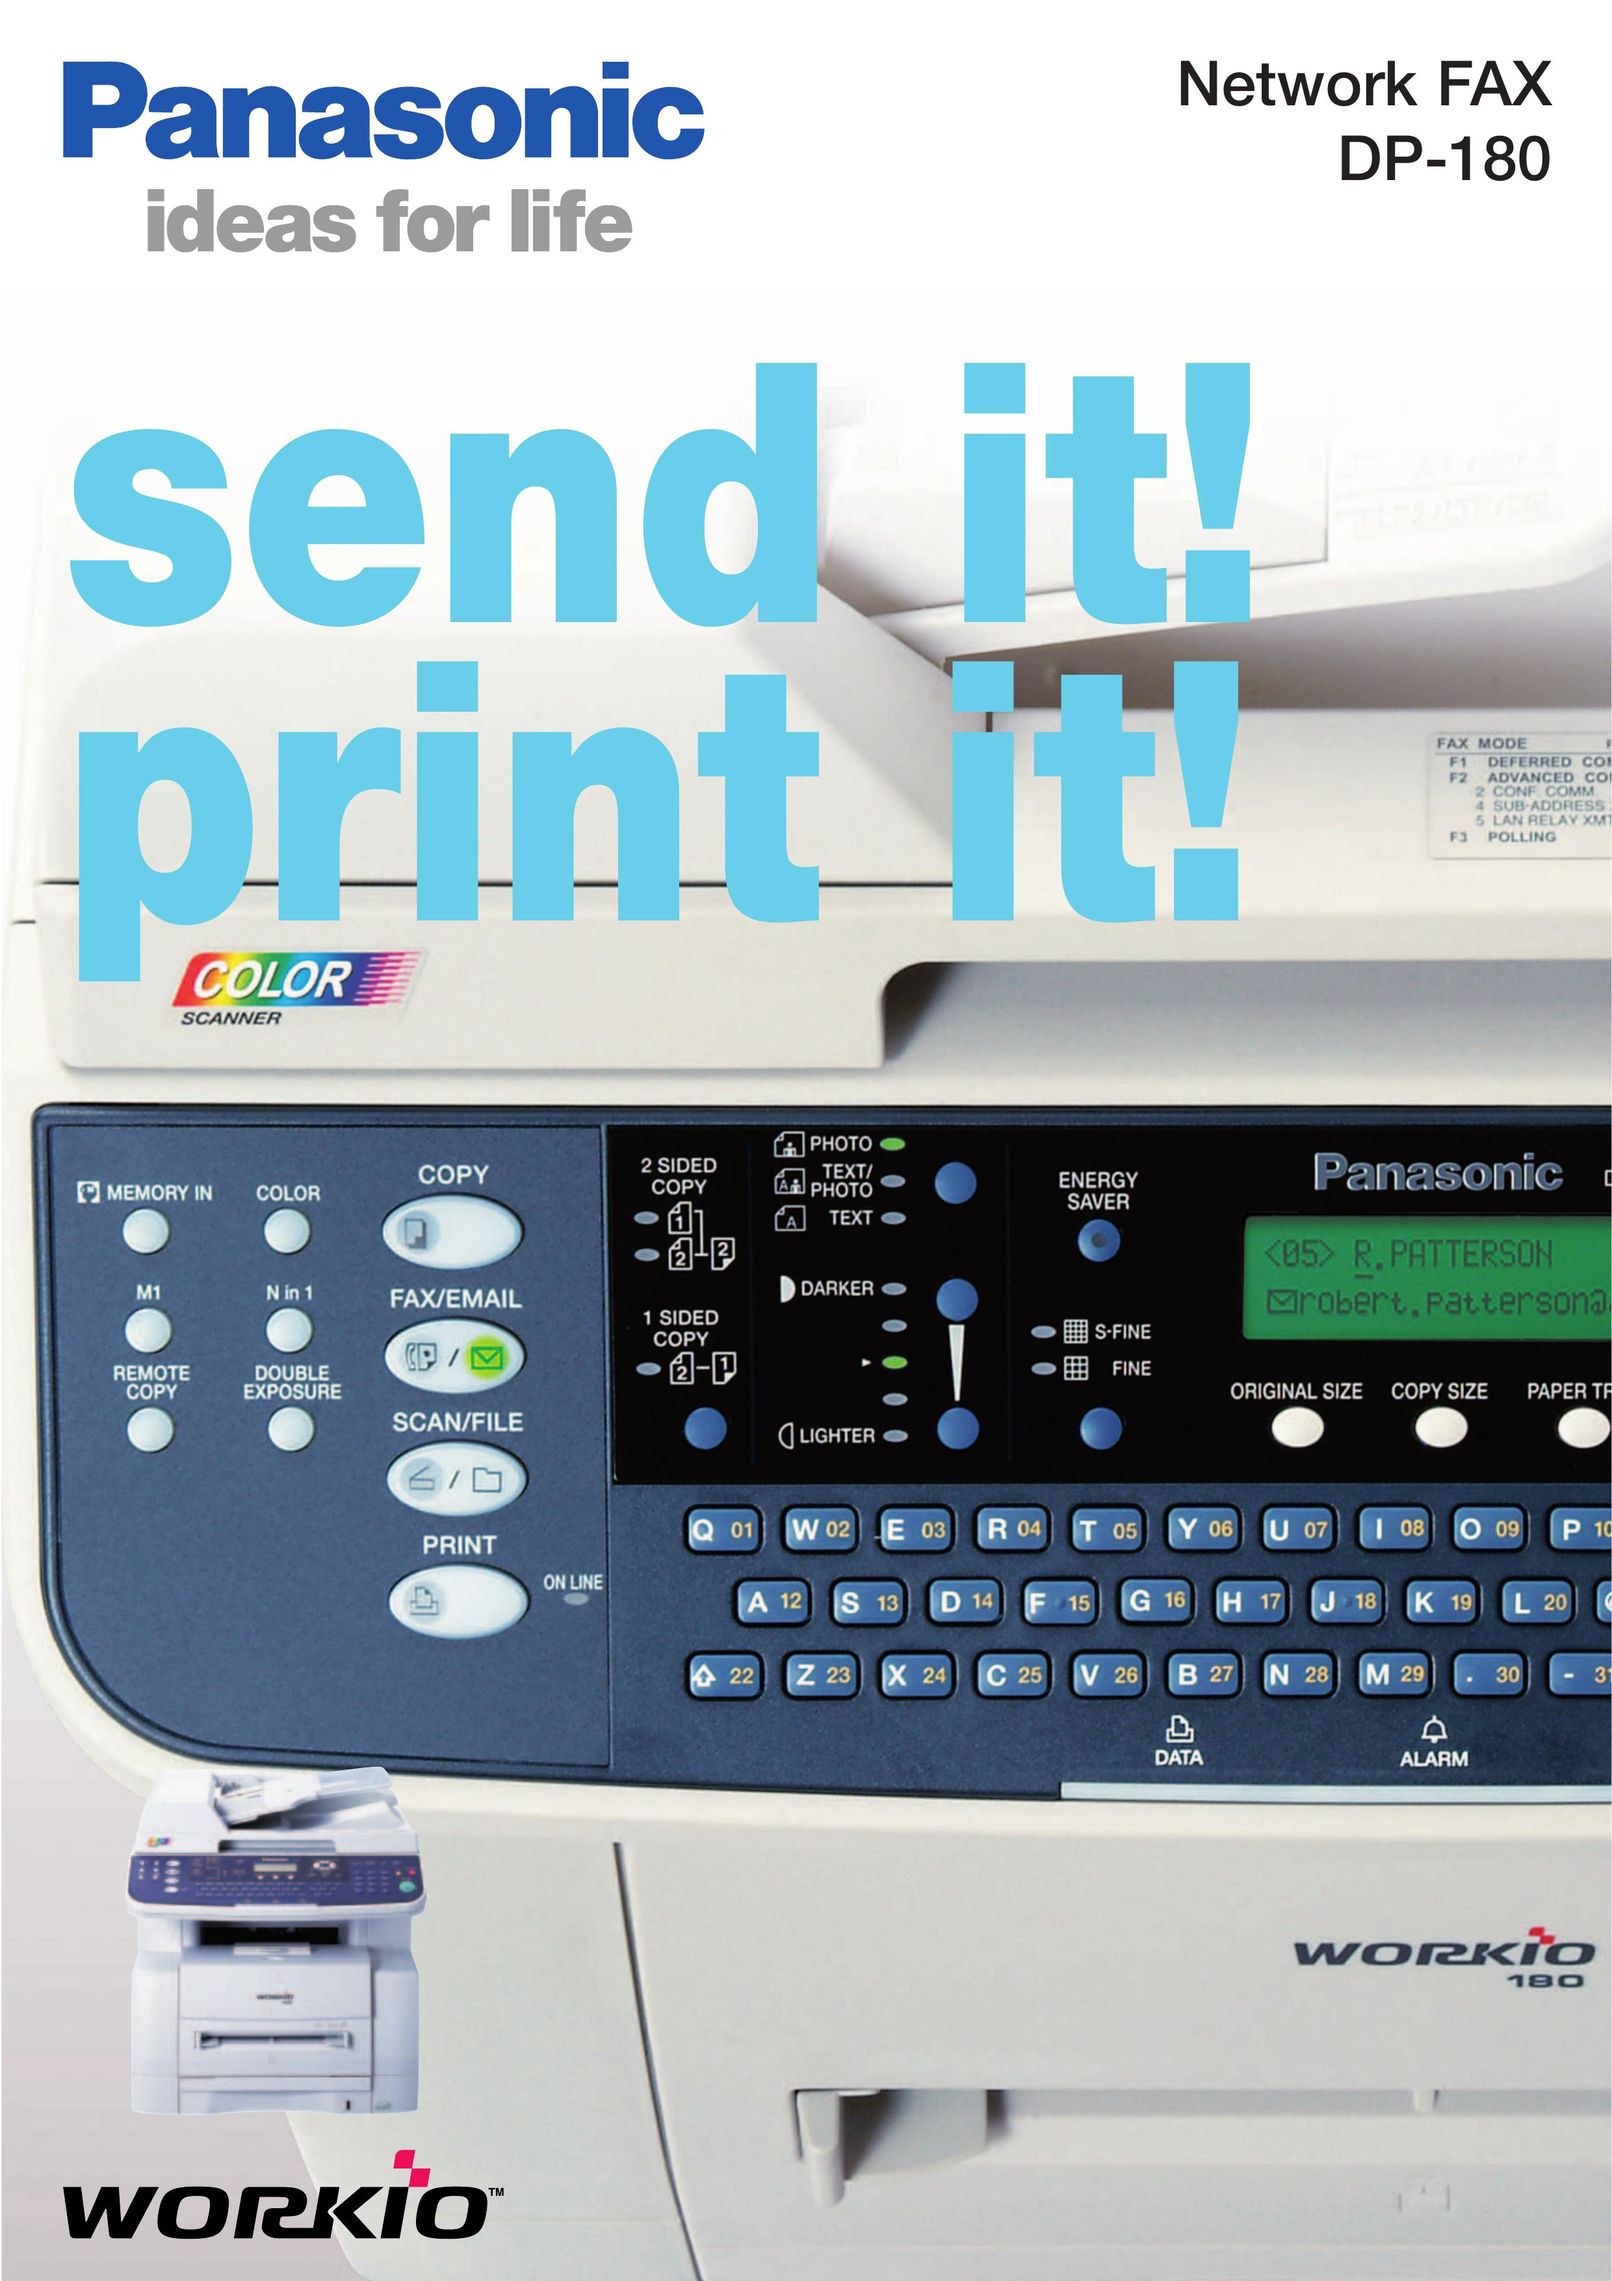 Panasonic DP-180 Fax Machine User Manual